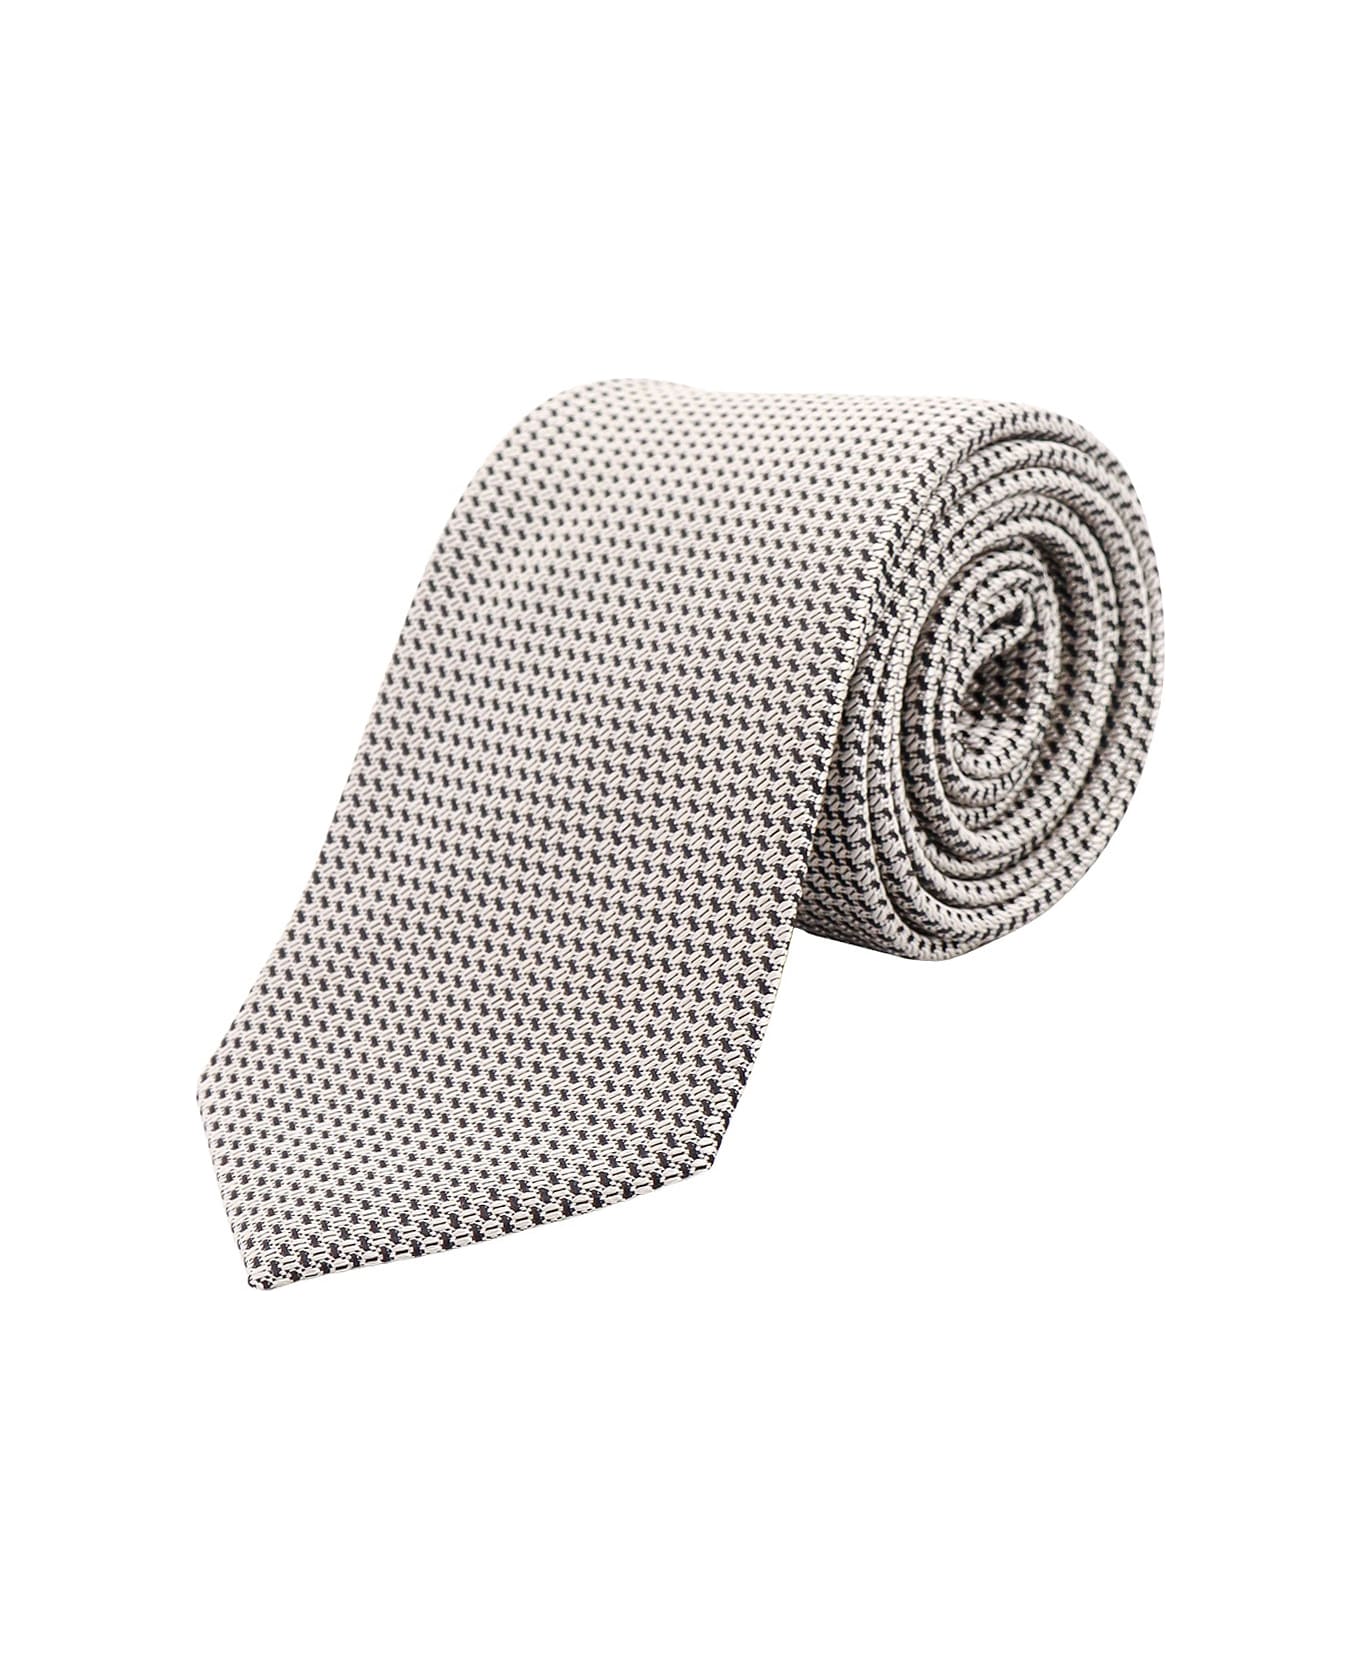 Tom Ford Tie - Grey ネクタイ